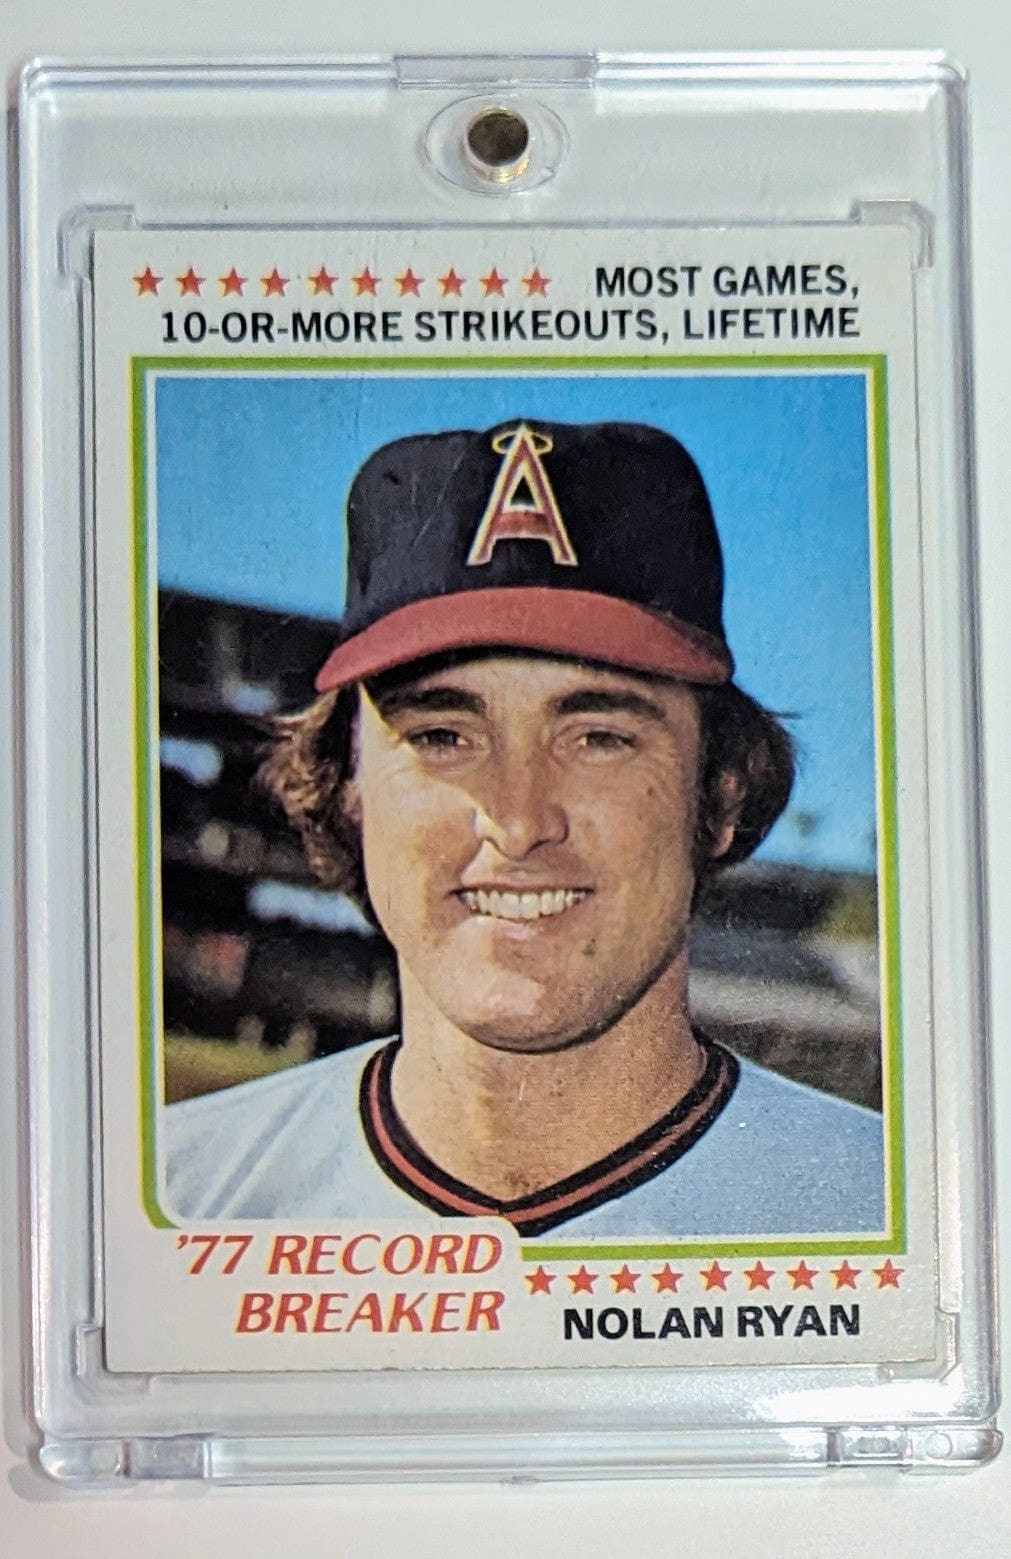 FIINR Baseball Card 1978 Topps Nolan Ryan Vintage Baseball Card #6 - Mint Condition - Tops Koufax Record